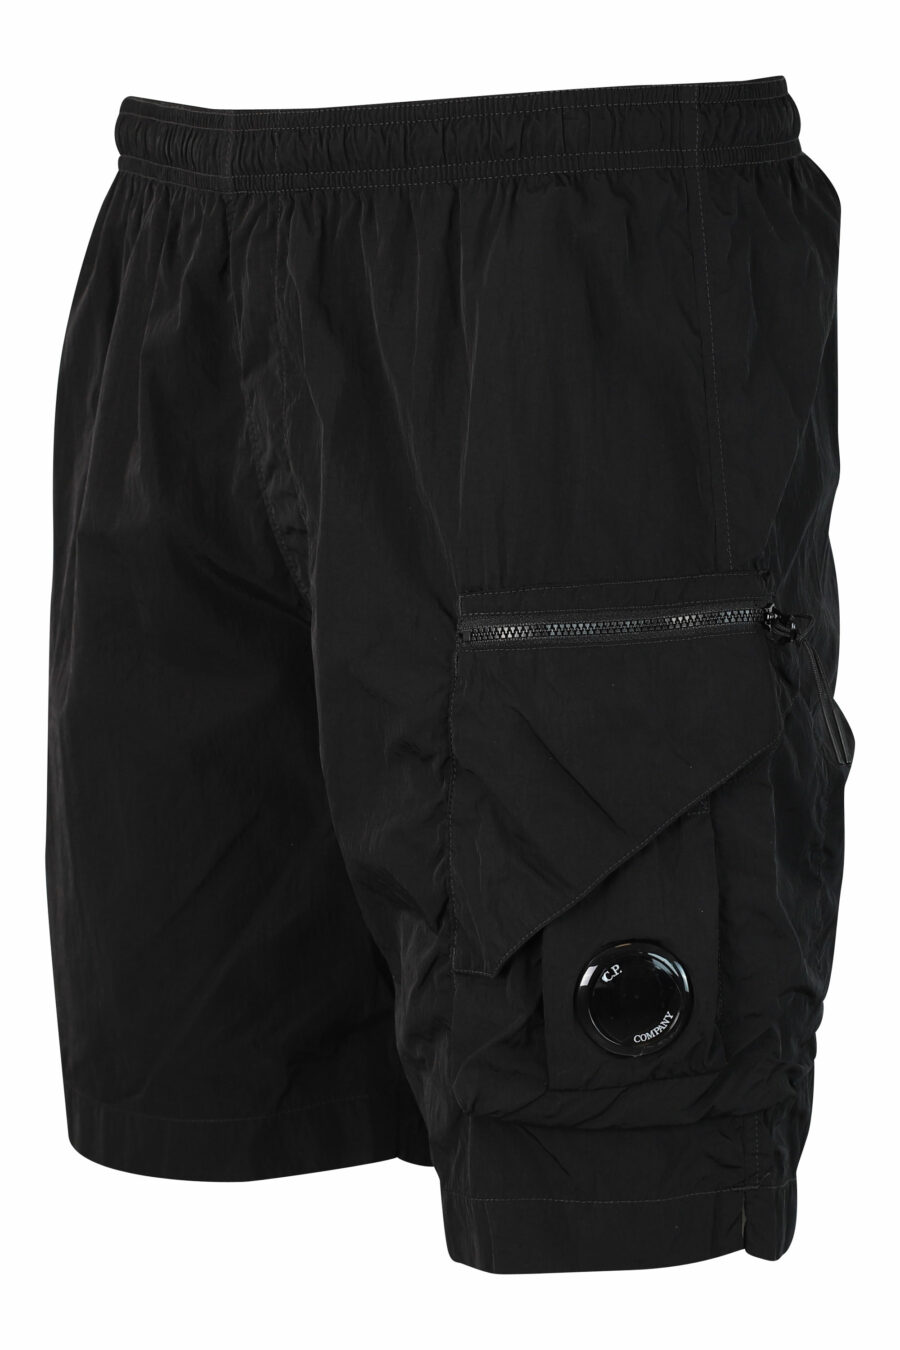 Black cargo style swimming costume with circular mini-logo - IMG 9880 1